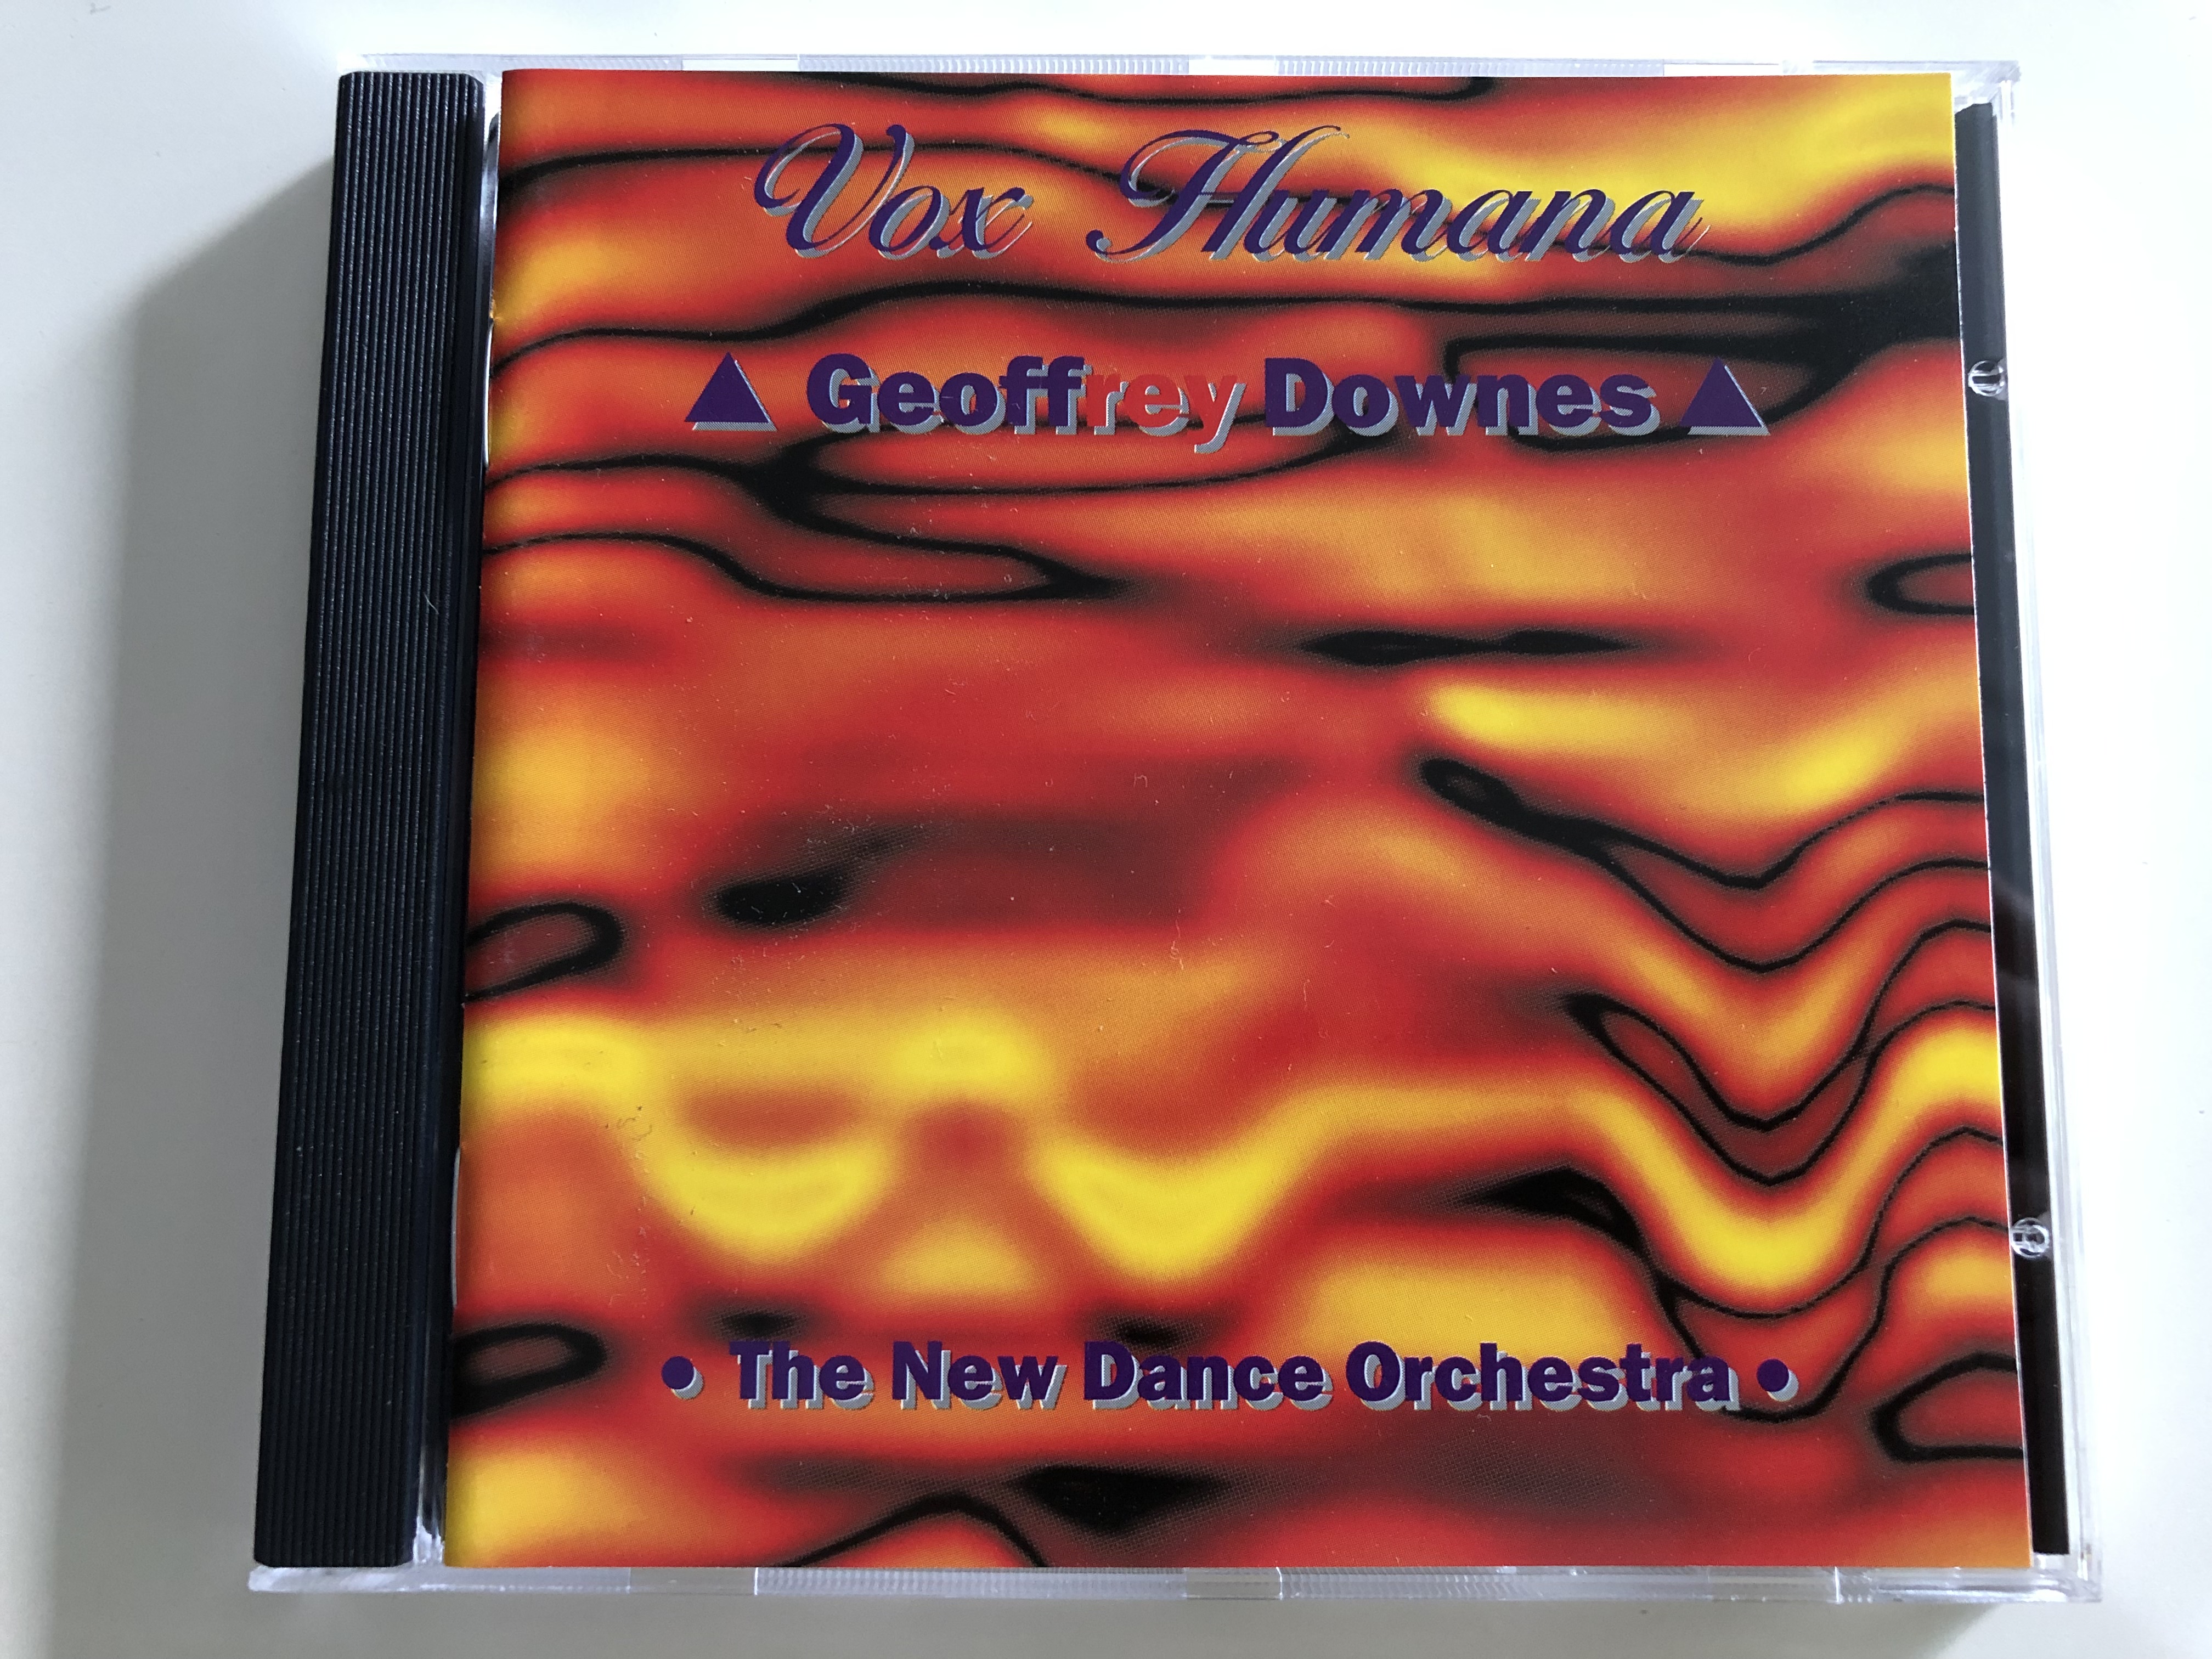 geoffrey-downes-vox-humana-the-new-dance-orchestra-audio-cd-1995-czar-records-bp214cd-1-.jpg